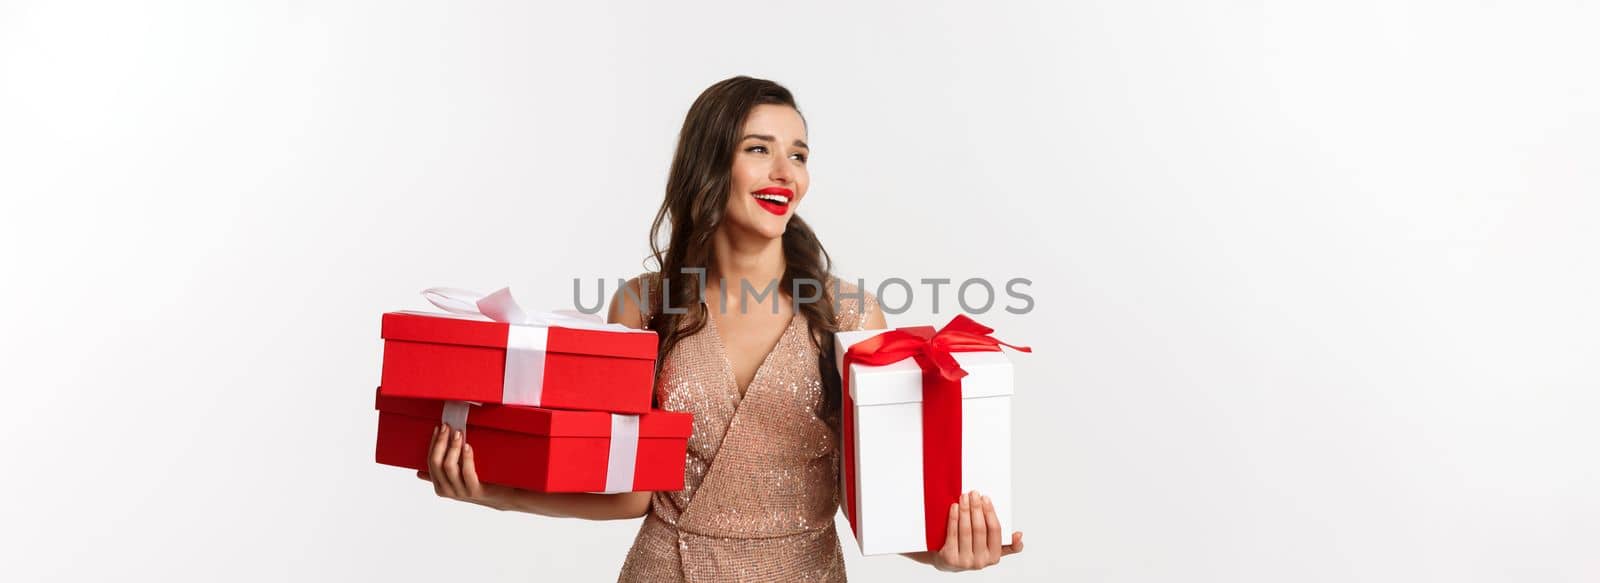 Holidays, celebration concept. Elegant woman with red lips, luxury dress, holding Christmas presents and smiling, enjoying New Year eve, white background.